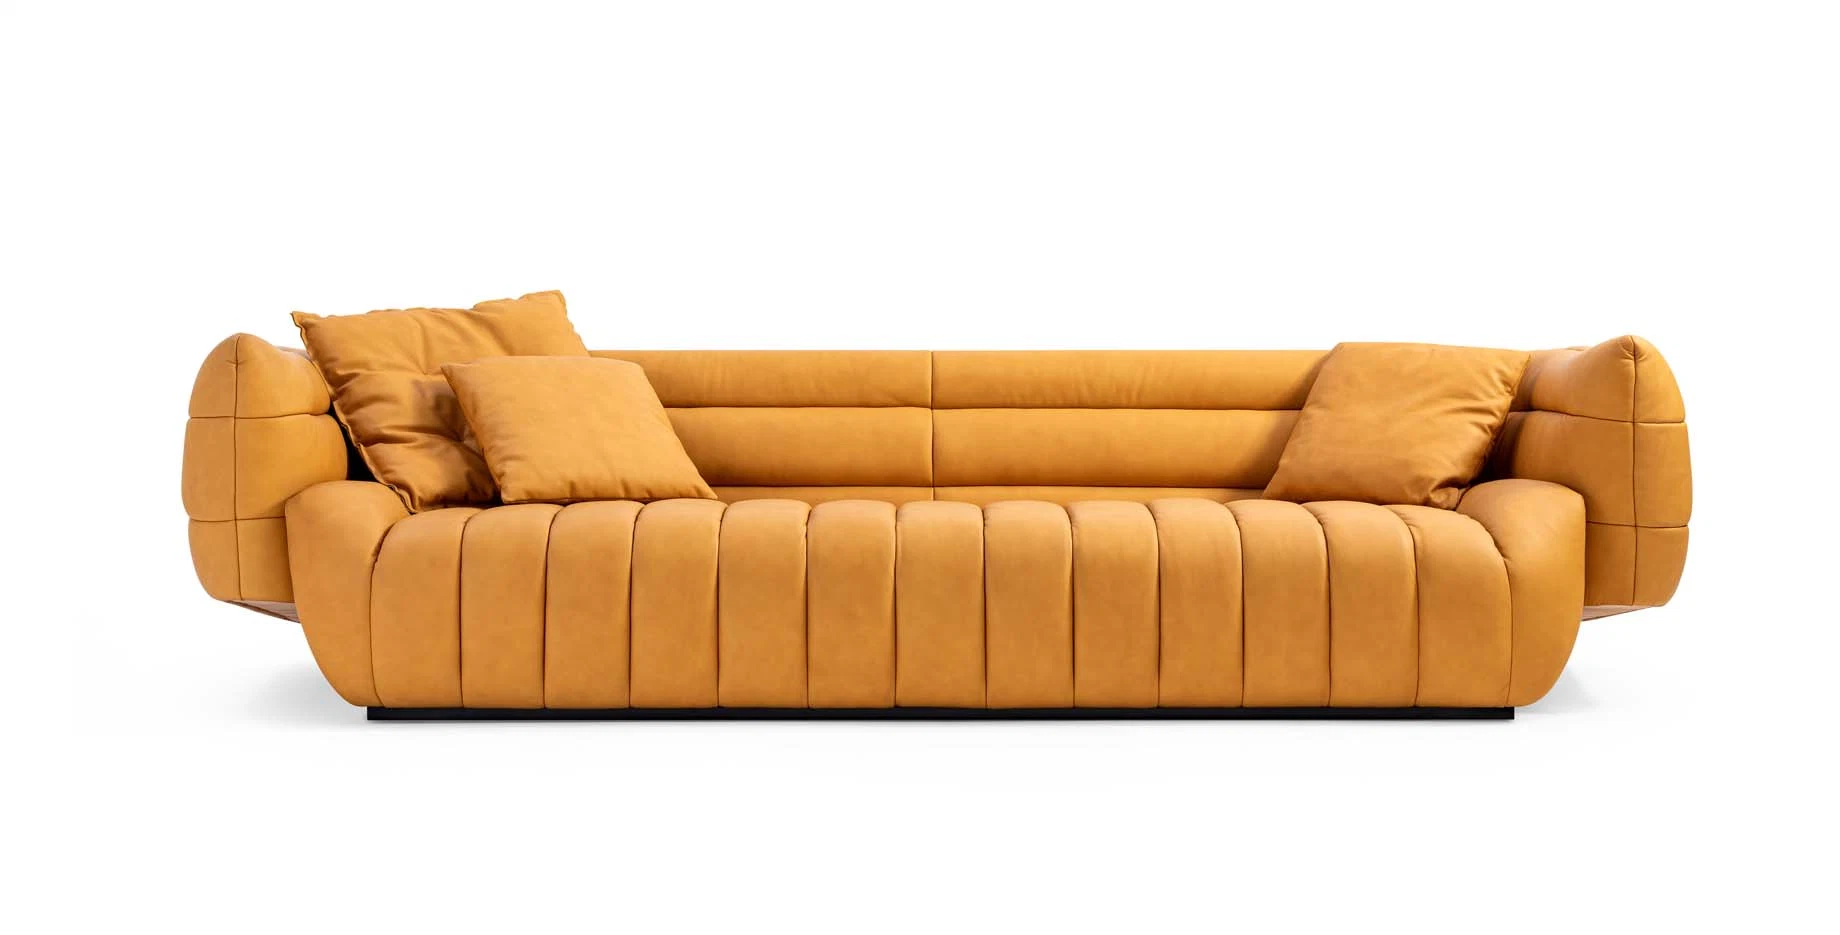 Modern Minimalist Design Soft Fabric Sofa Set Furniture for Home Luxury Living Room Sofa